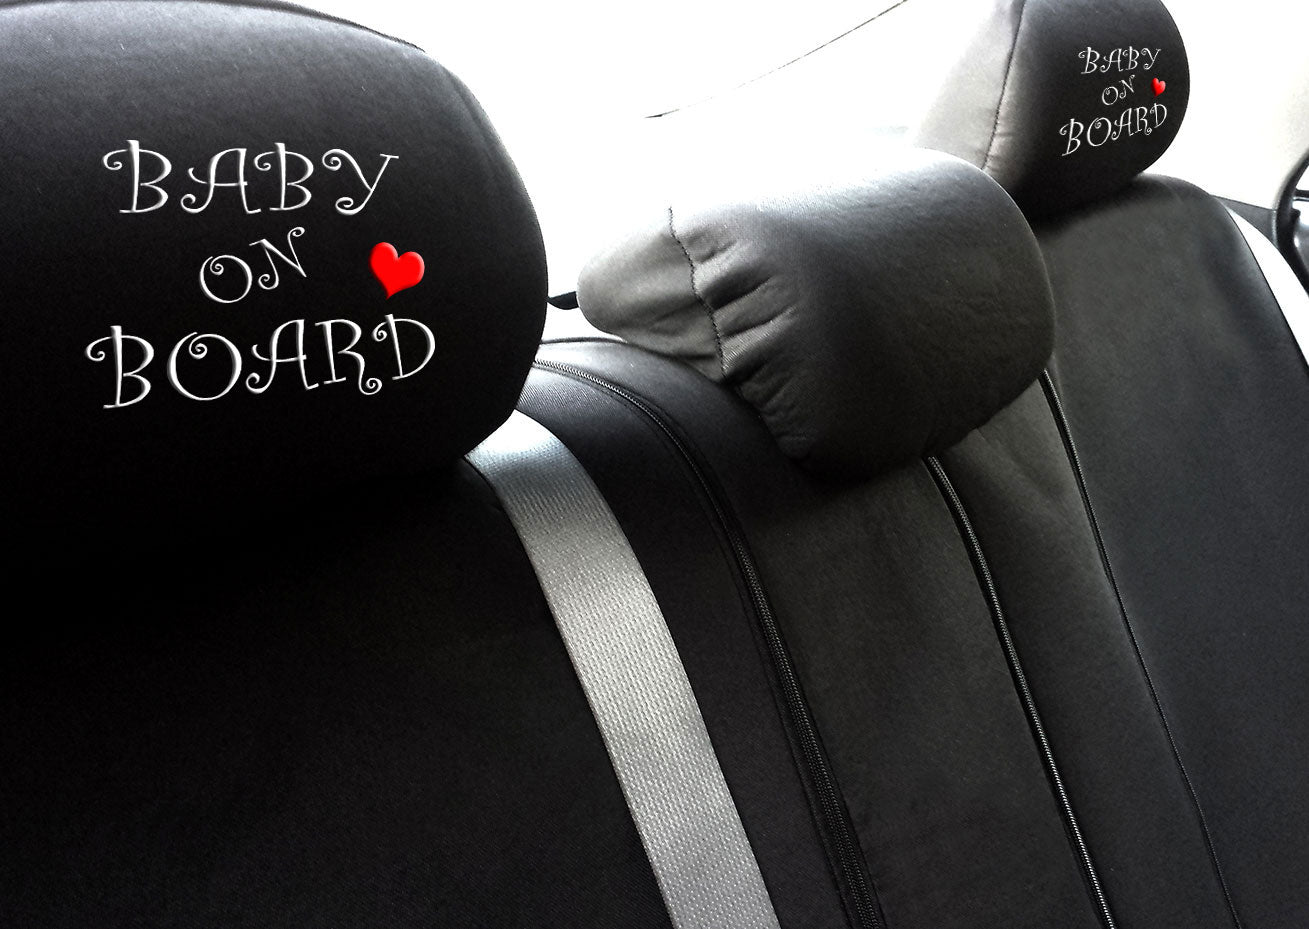 Embroidery Baby on Board Logo Design Auto Truck SUV Car Seat Headrest Cover Accessory 1 Piece - Yupbizauto